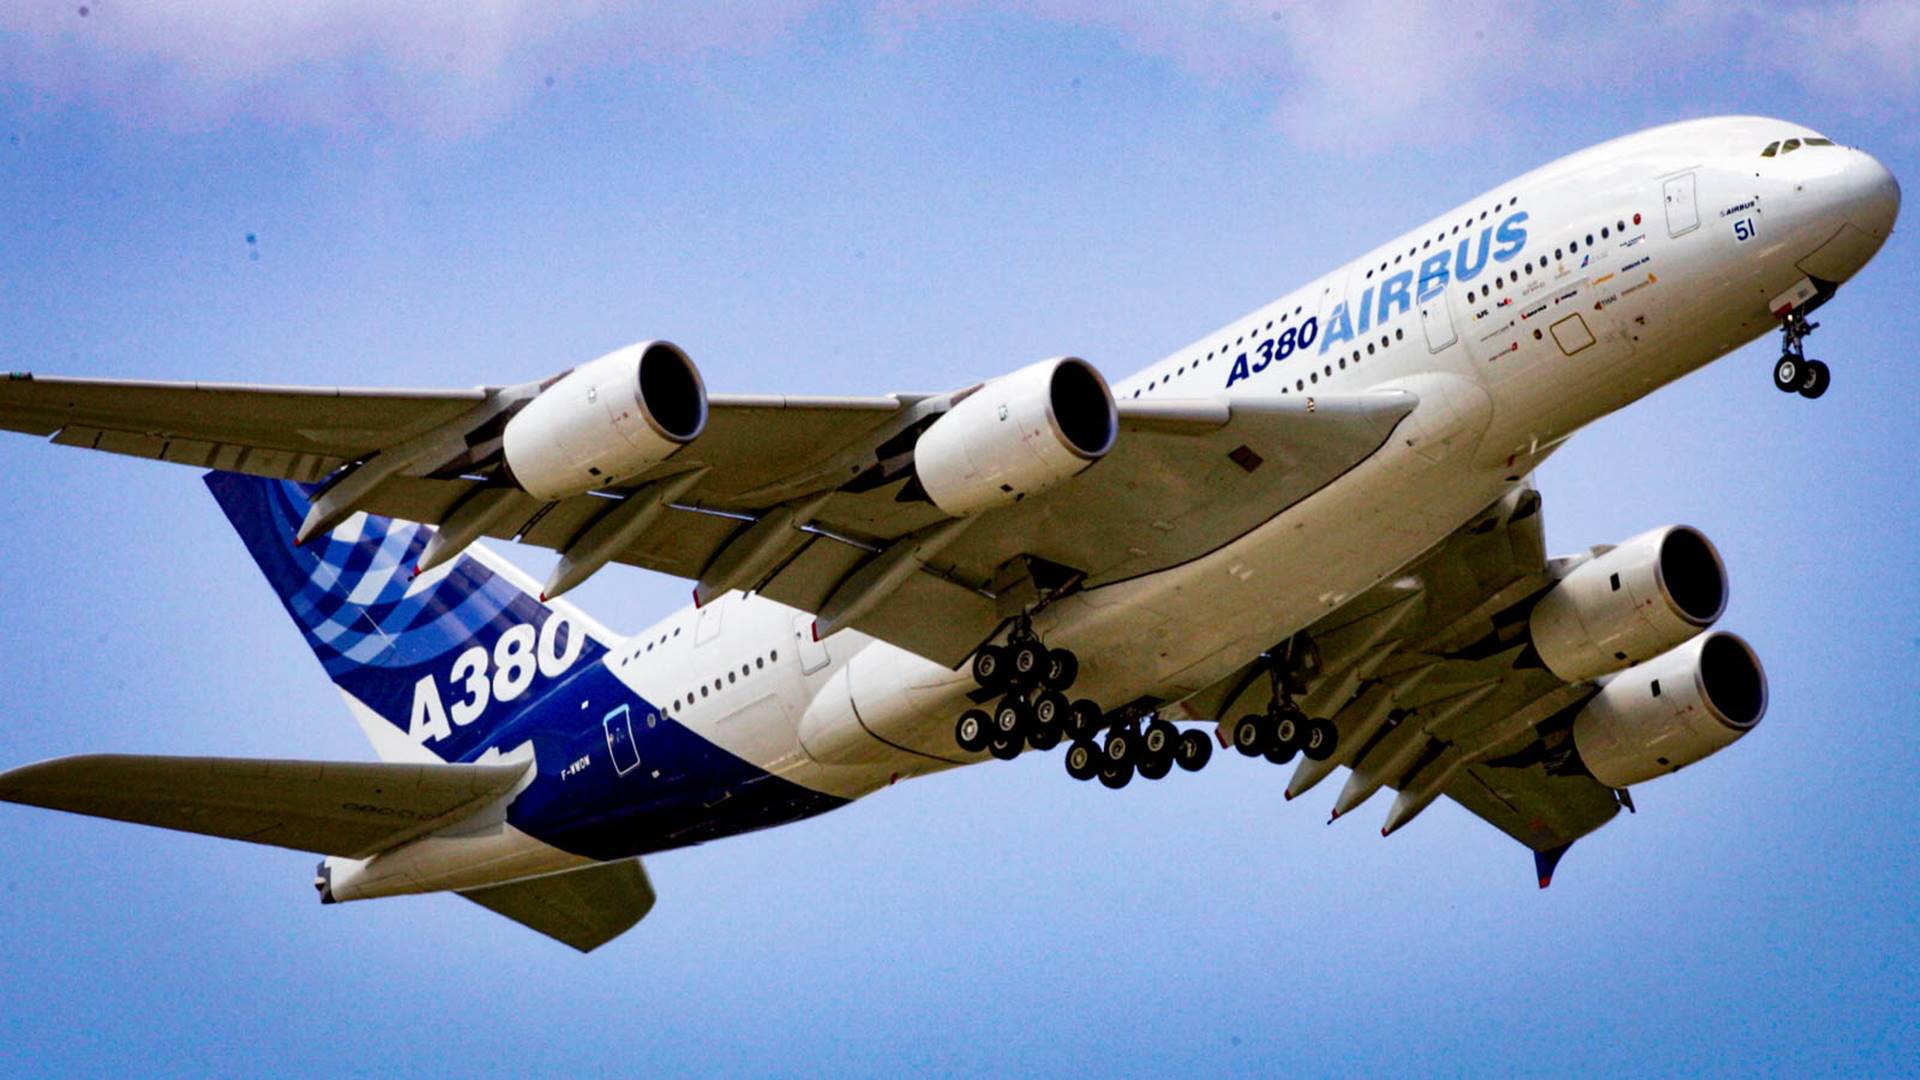 Airbus koristio 100 posto obnovljivo avionsko gorivo